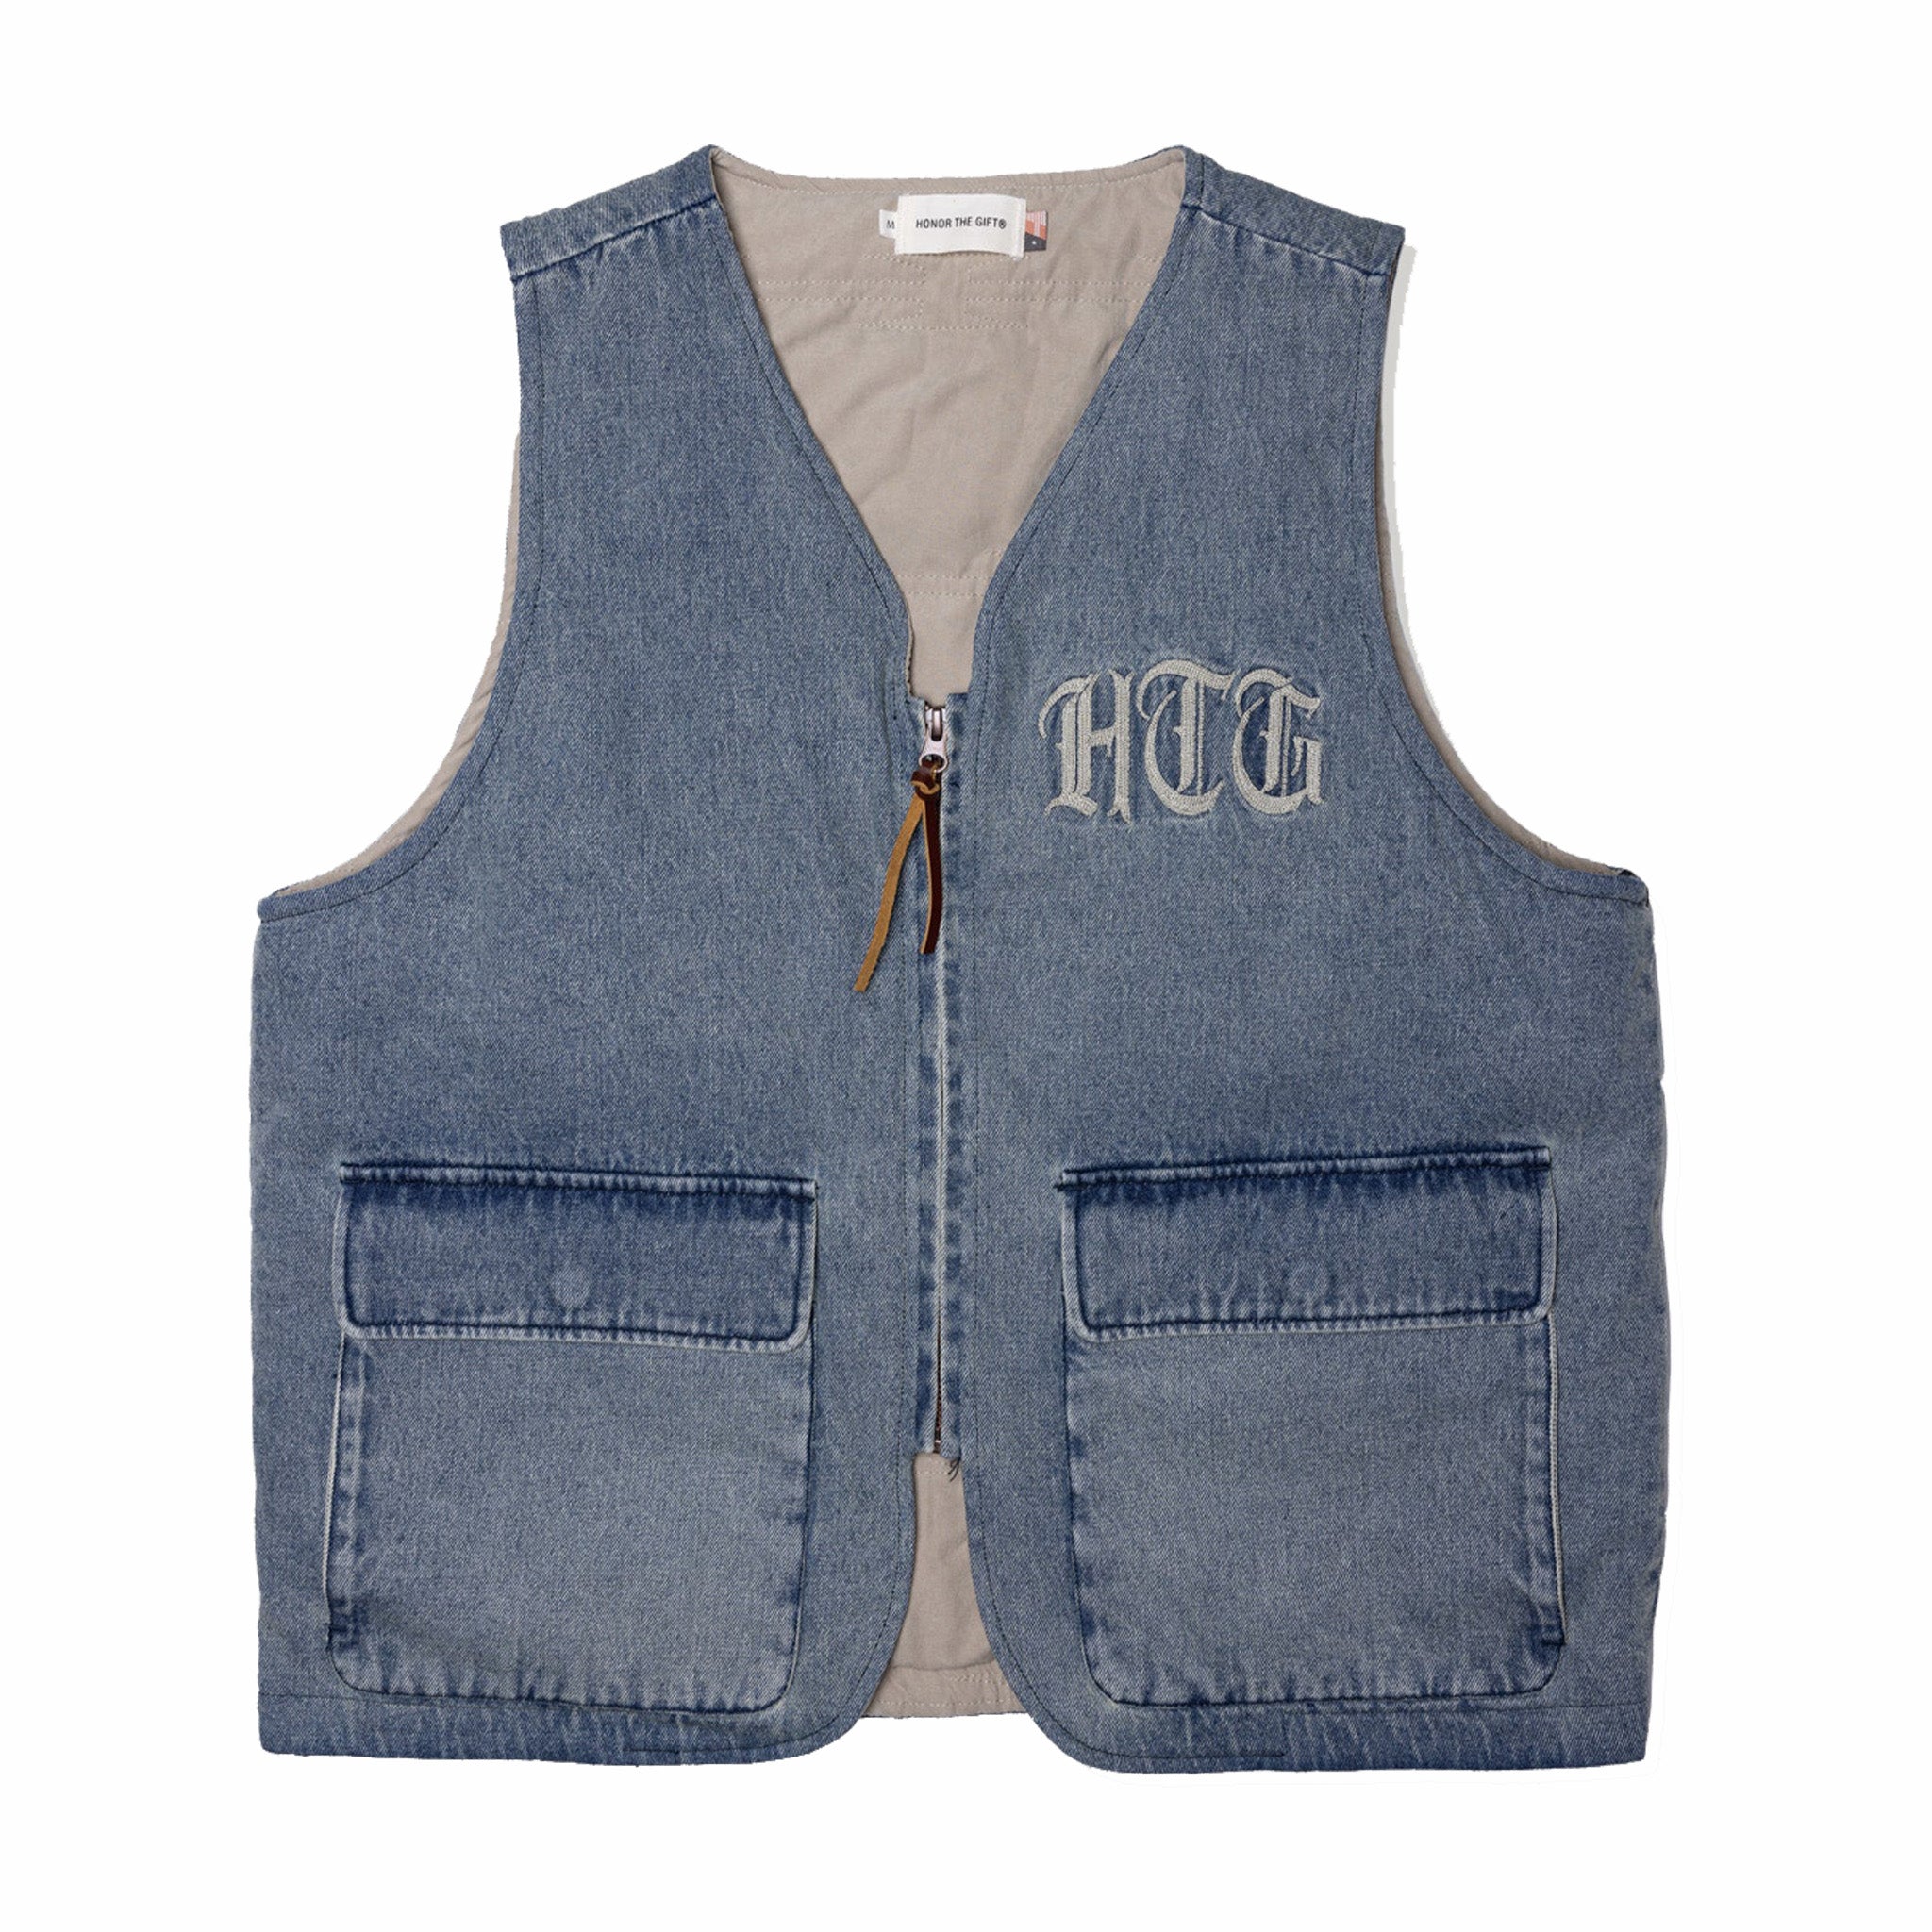 Honor The Gift HTG Vest (Light Indigo) - August Shop